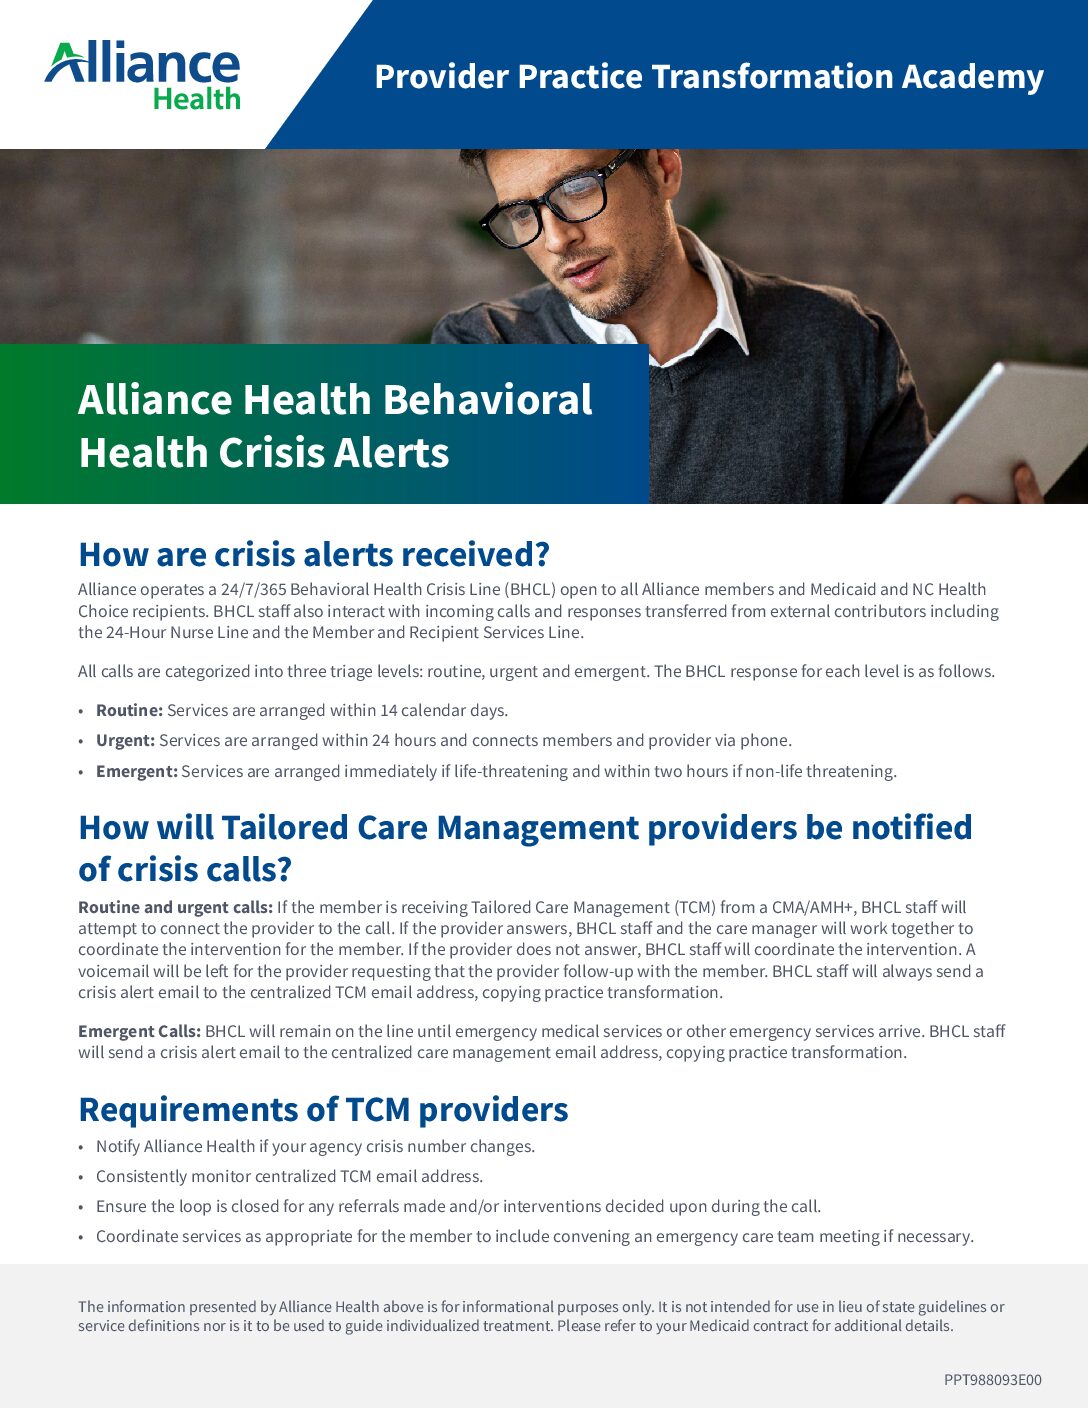 Alliance Health Behavioral Health Crisis Alerts